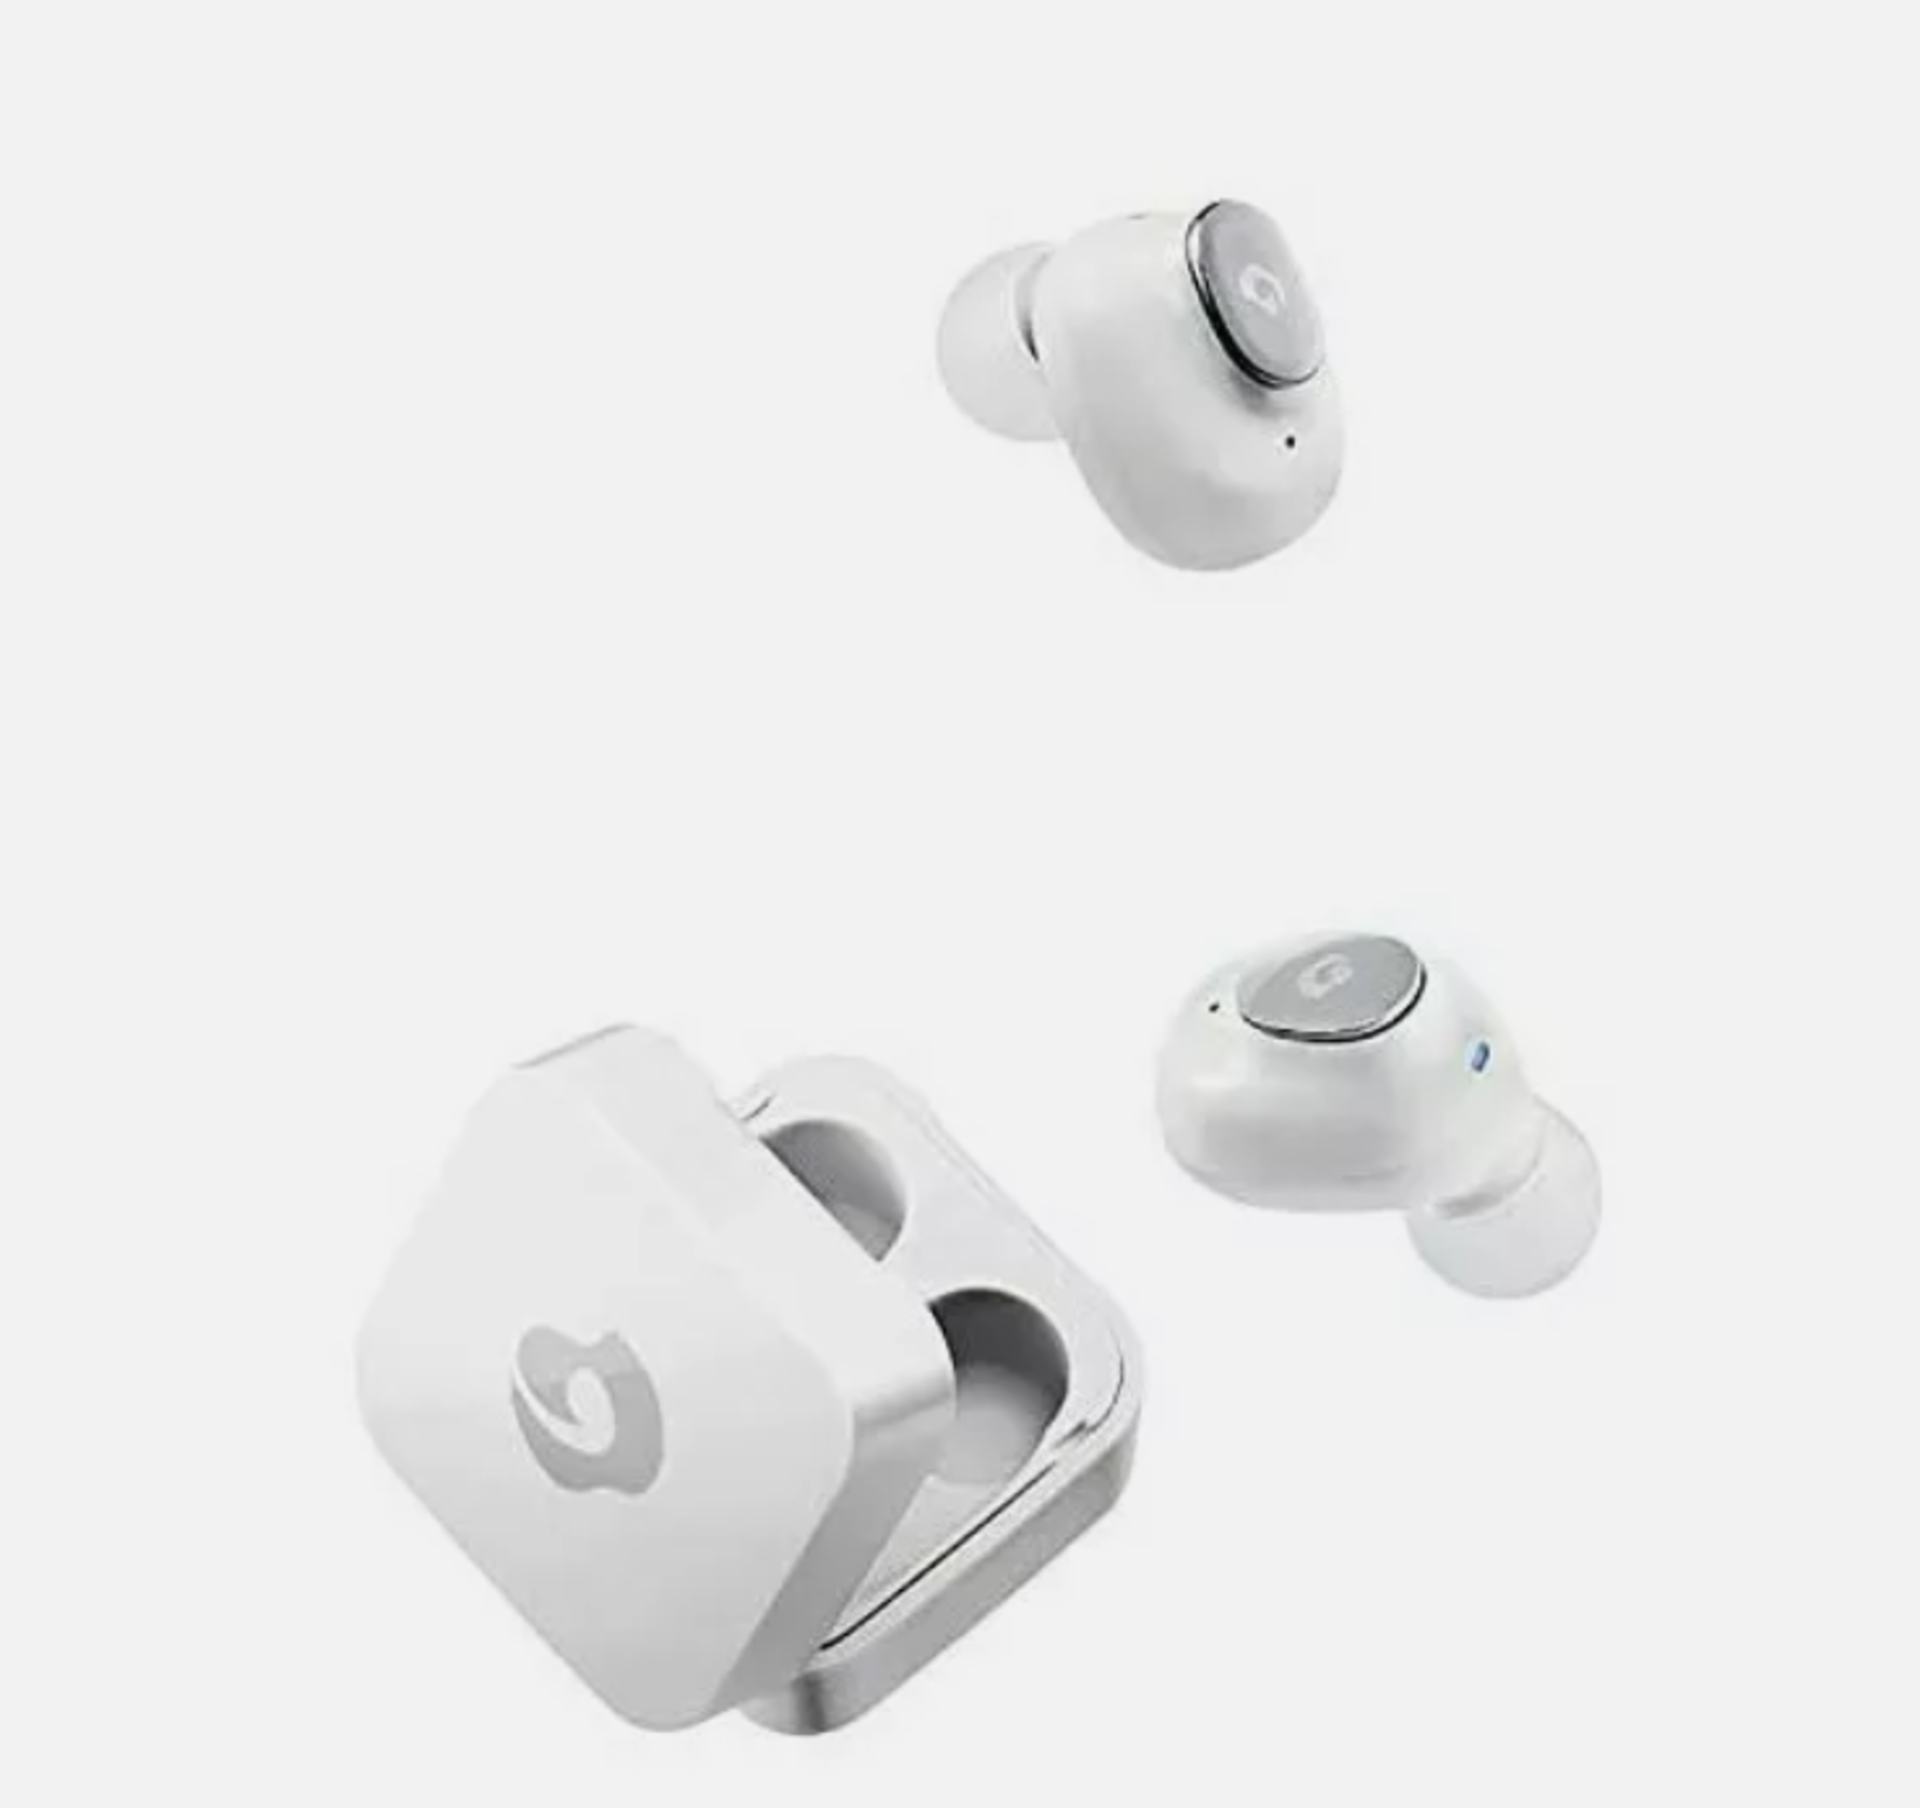 Glidic Sound Air Tw-5000S True Wireless Earbuds - Brand New Still Sealed - White - Image 2 of 3